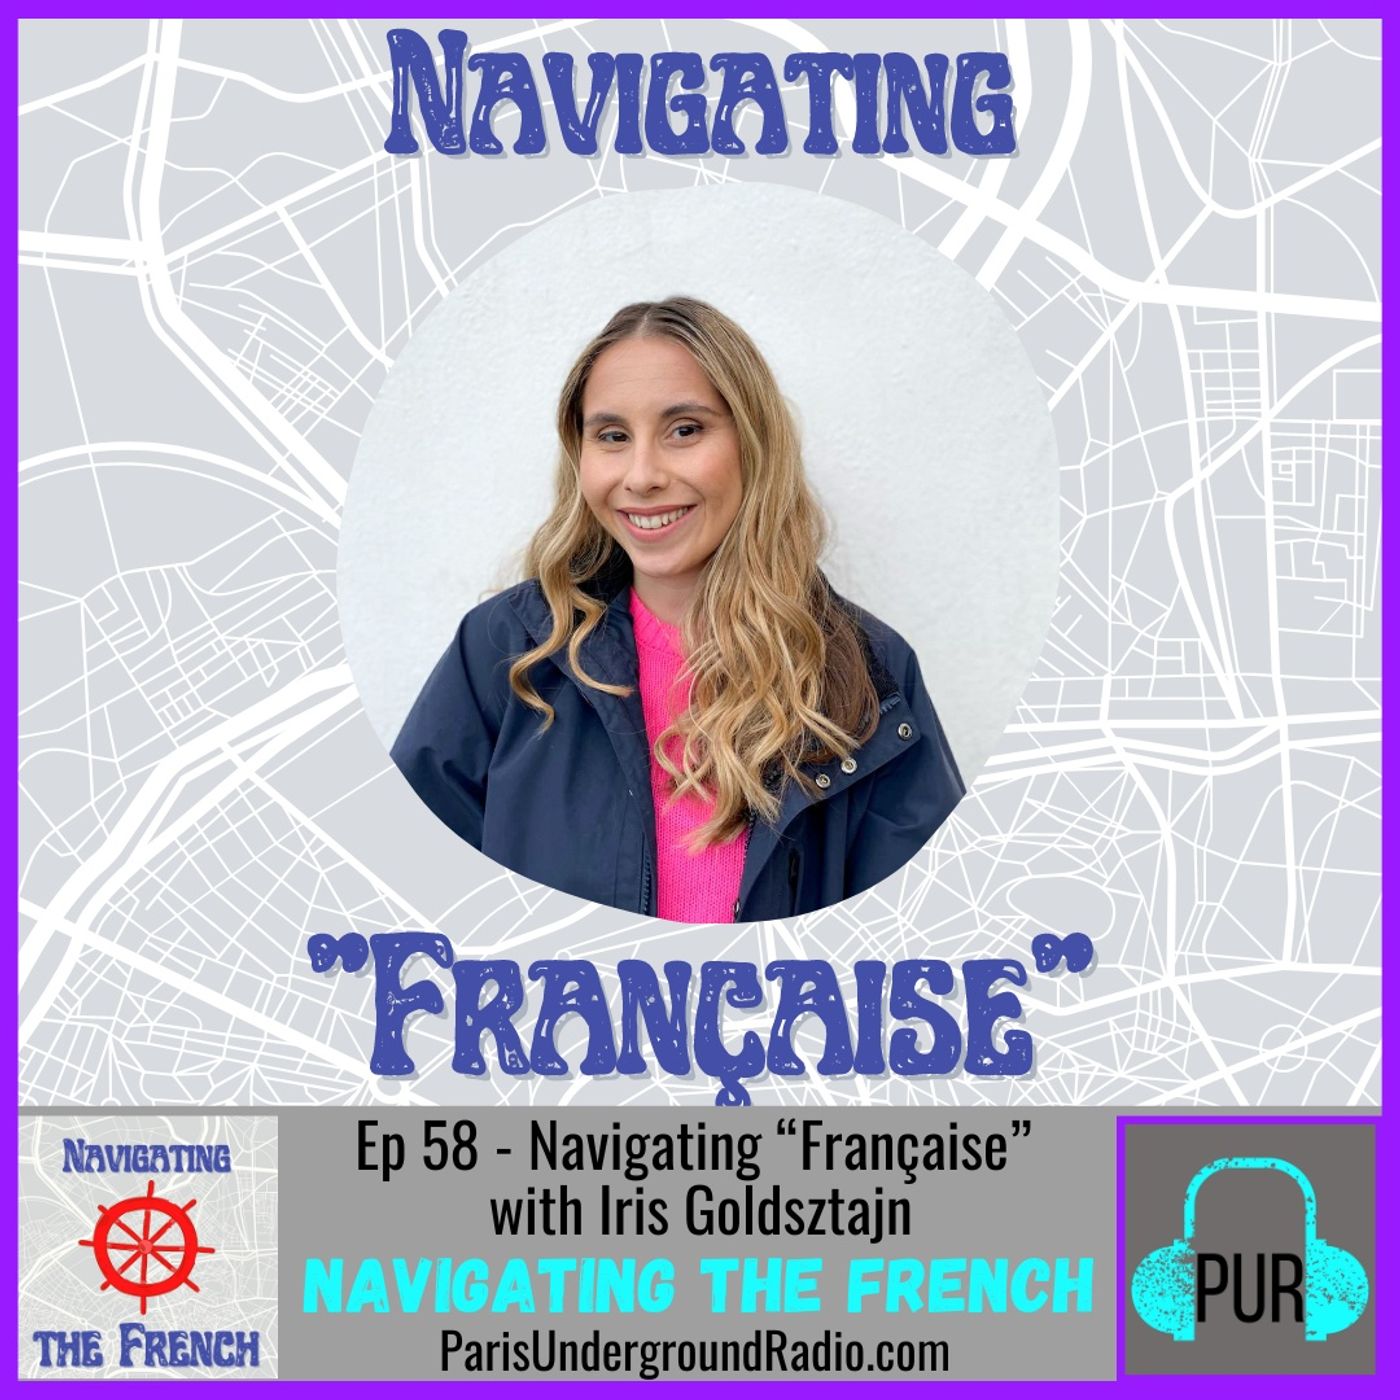 Ep 58 - Navigating “Française” with Iris Goldsztajn